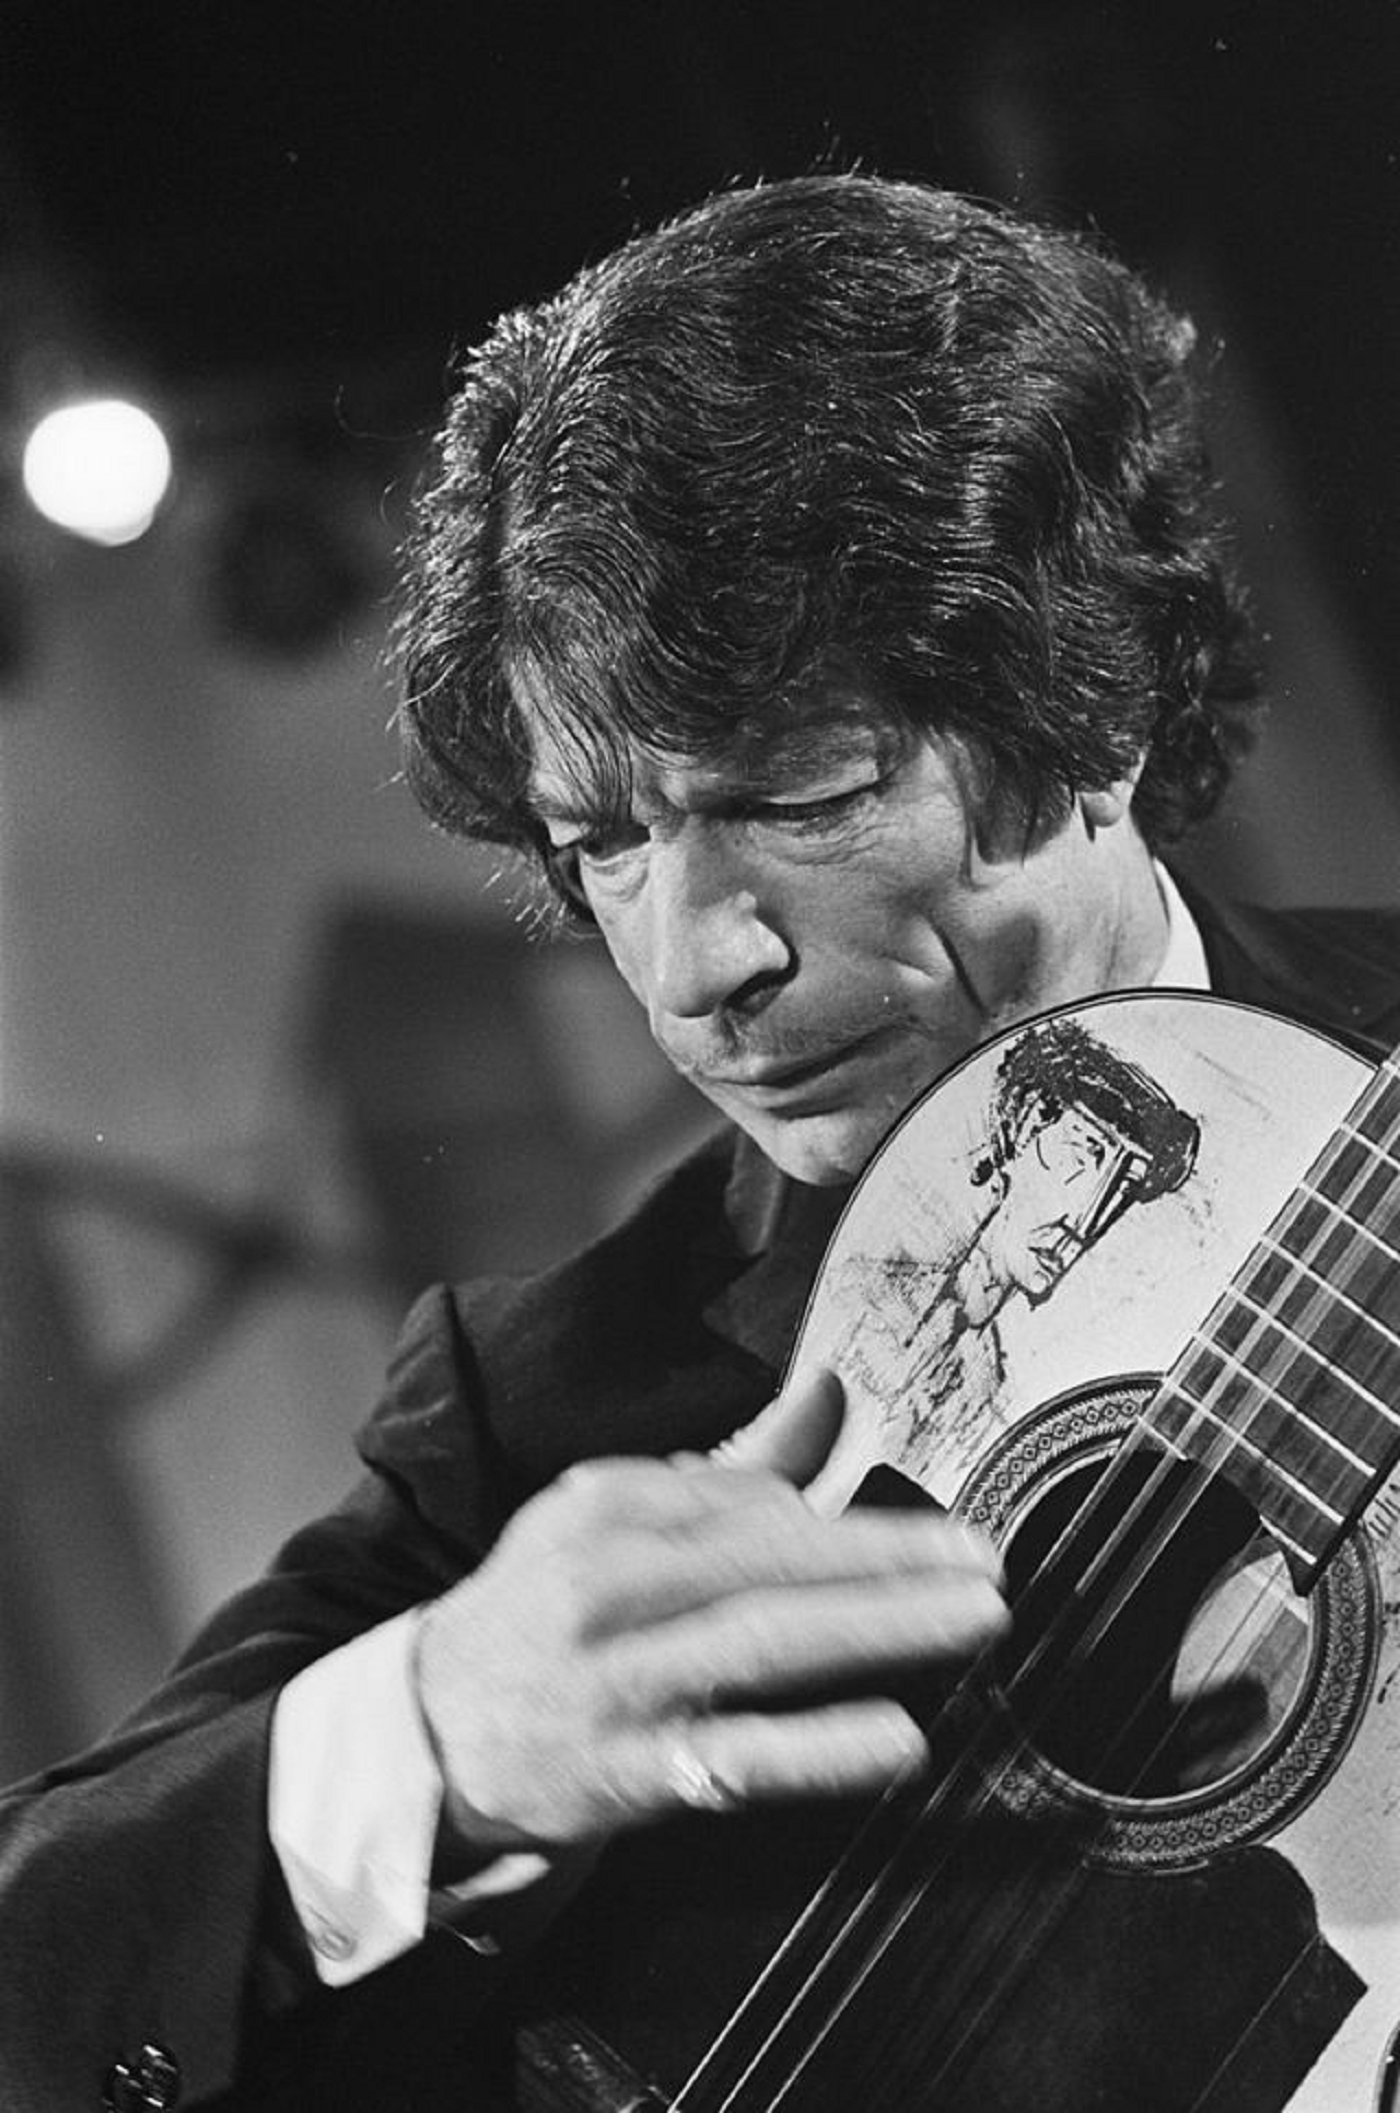 Neix Ricard Baliardo, el guitarrista gitano més internacional